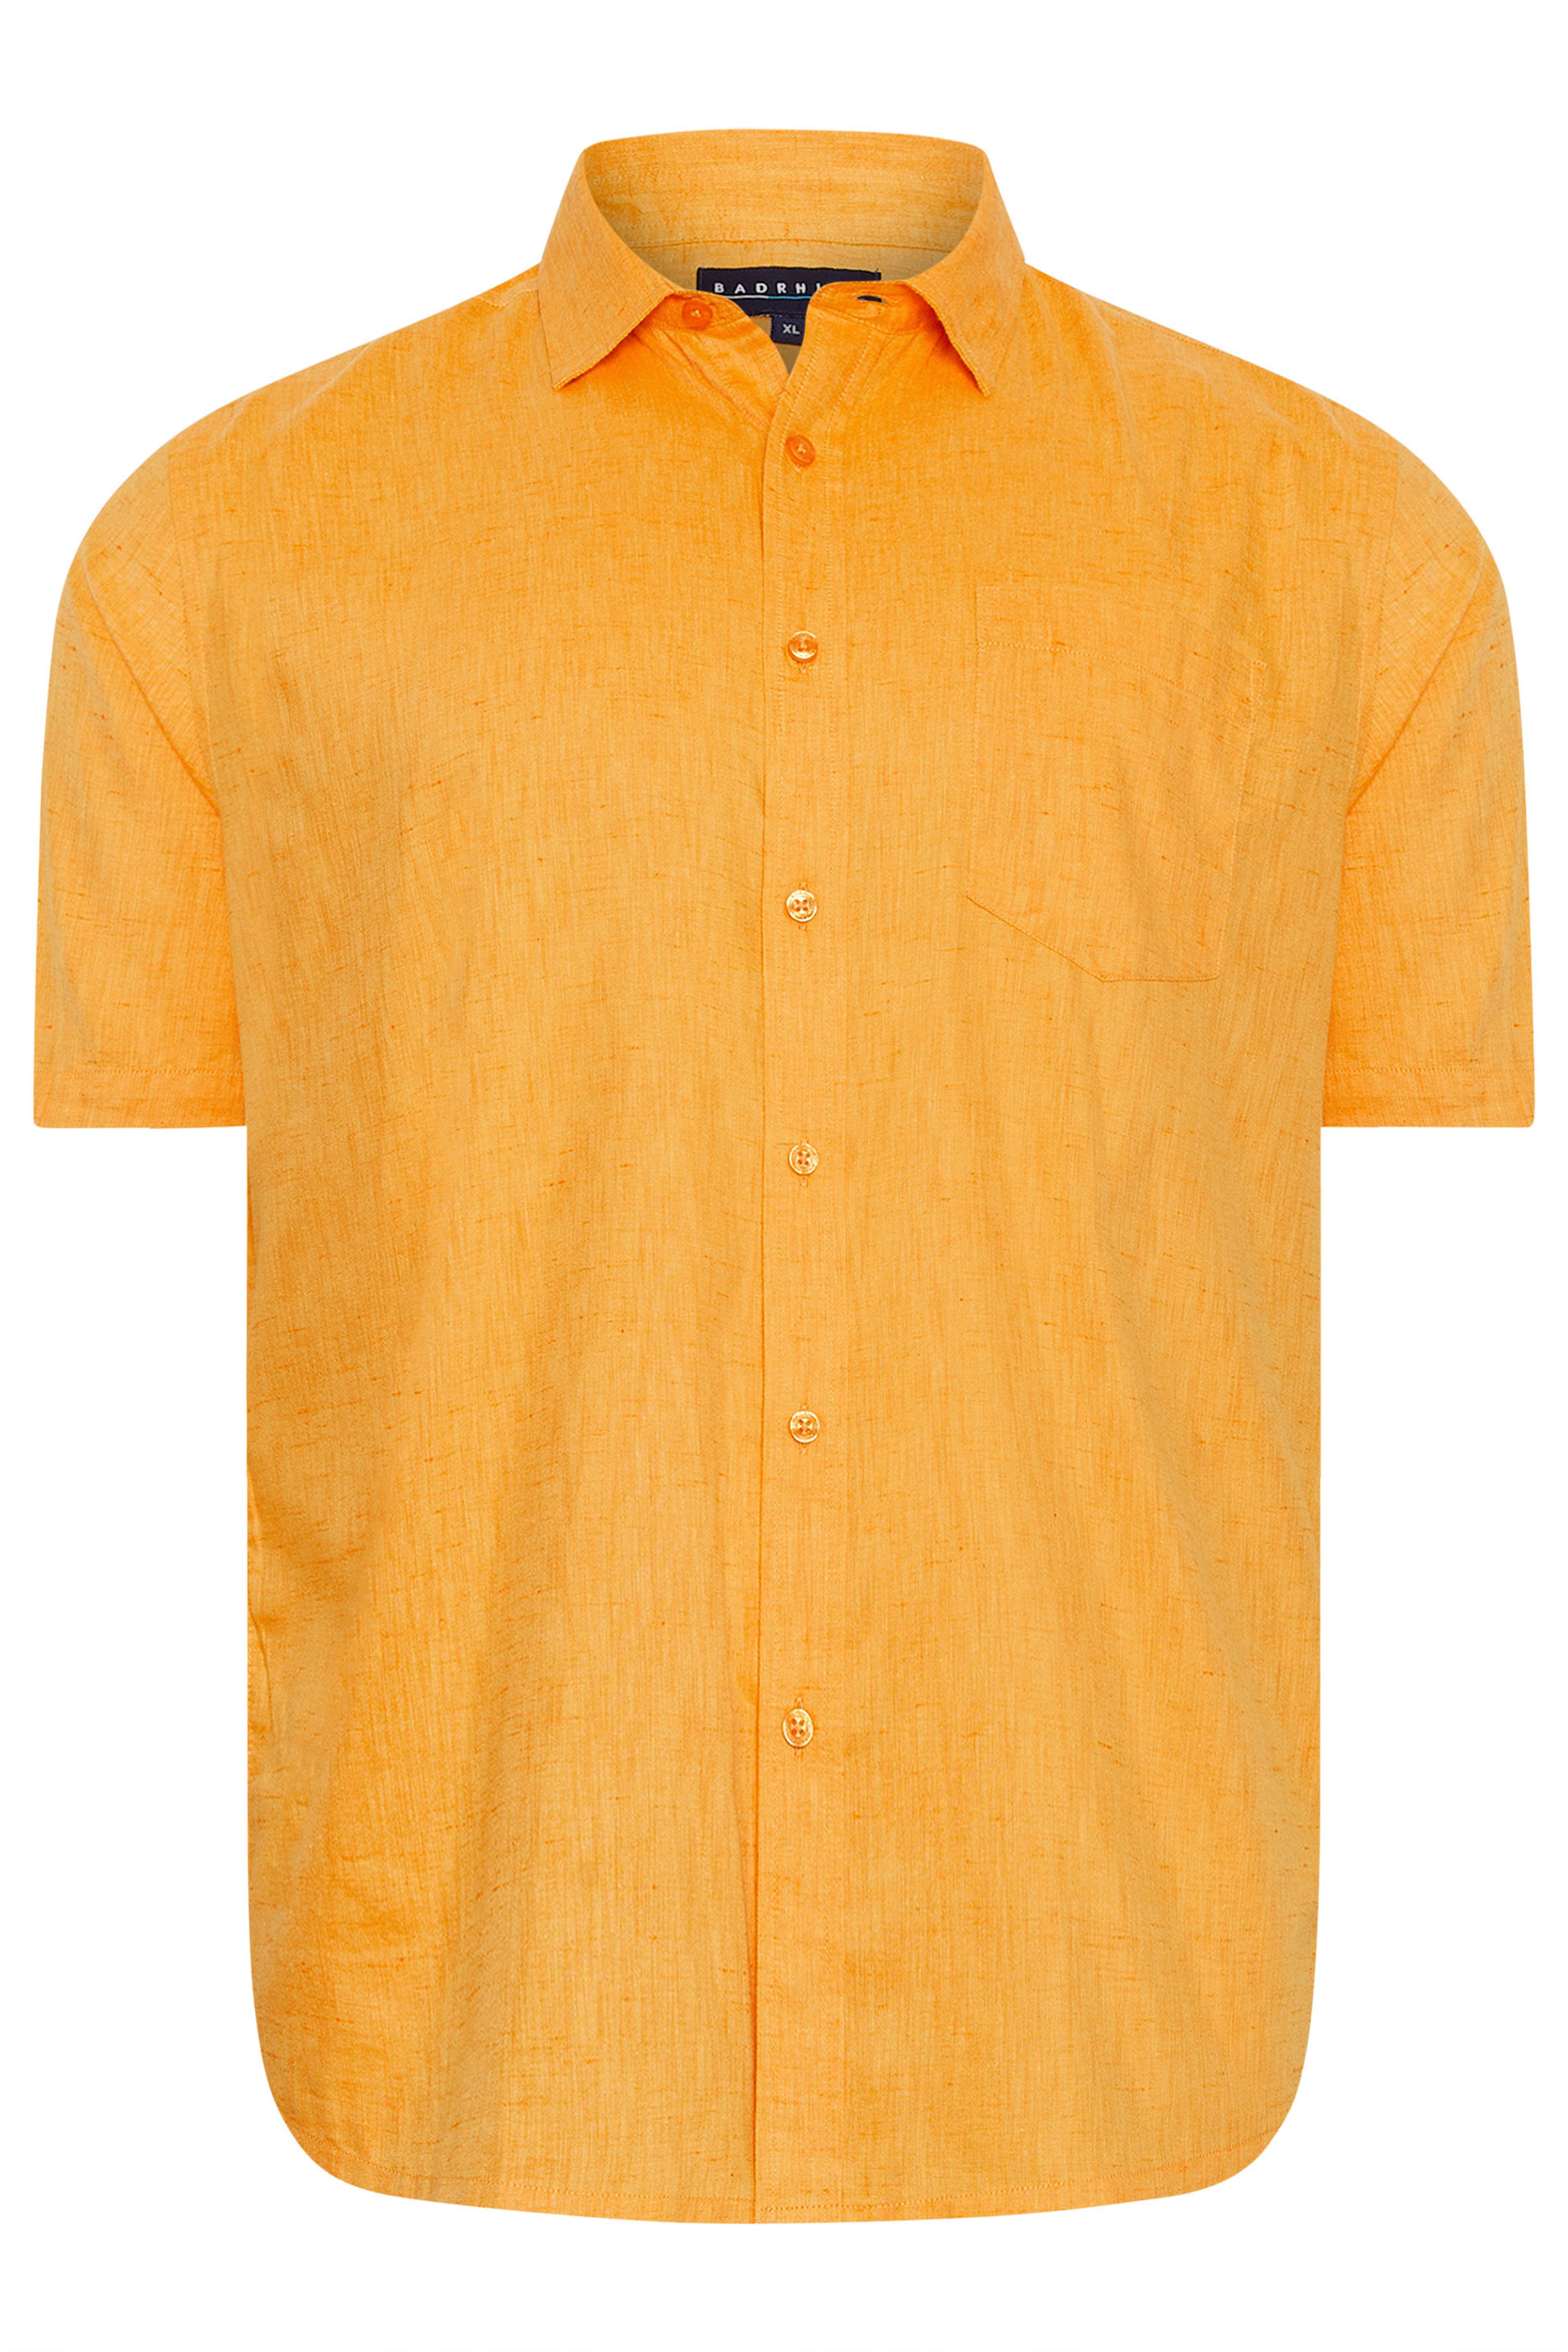 BadRhino Big & Tall Orange Marl Short Sleeve Shirt | BadRhino 2